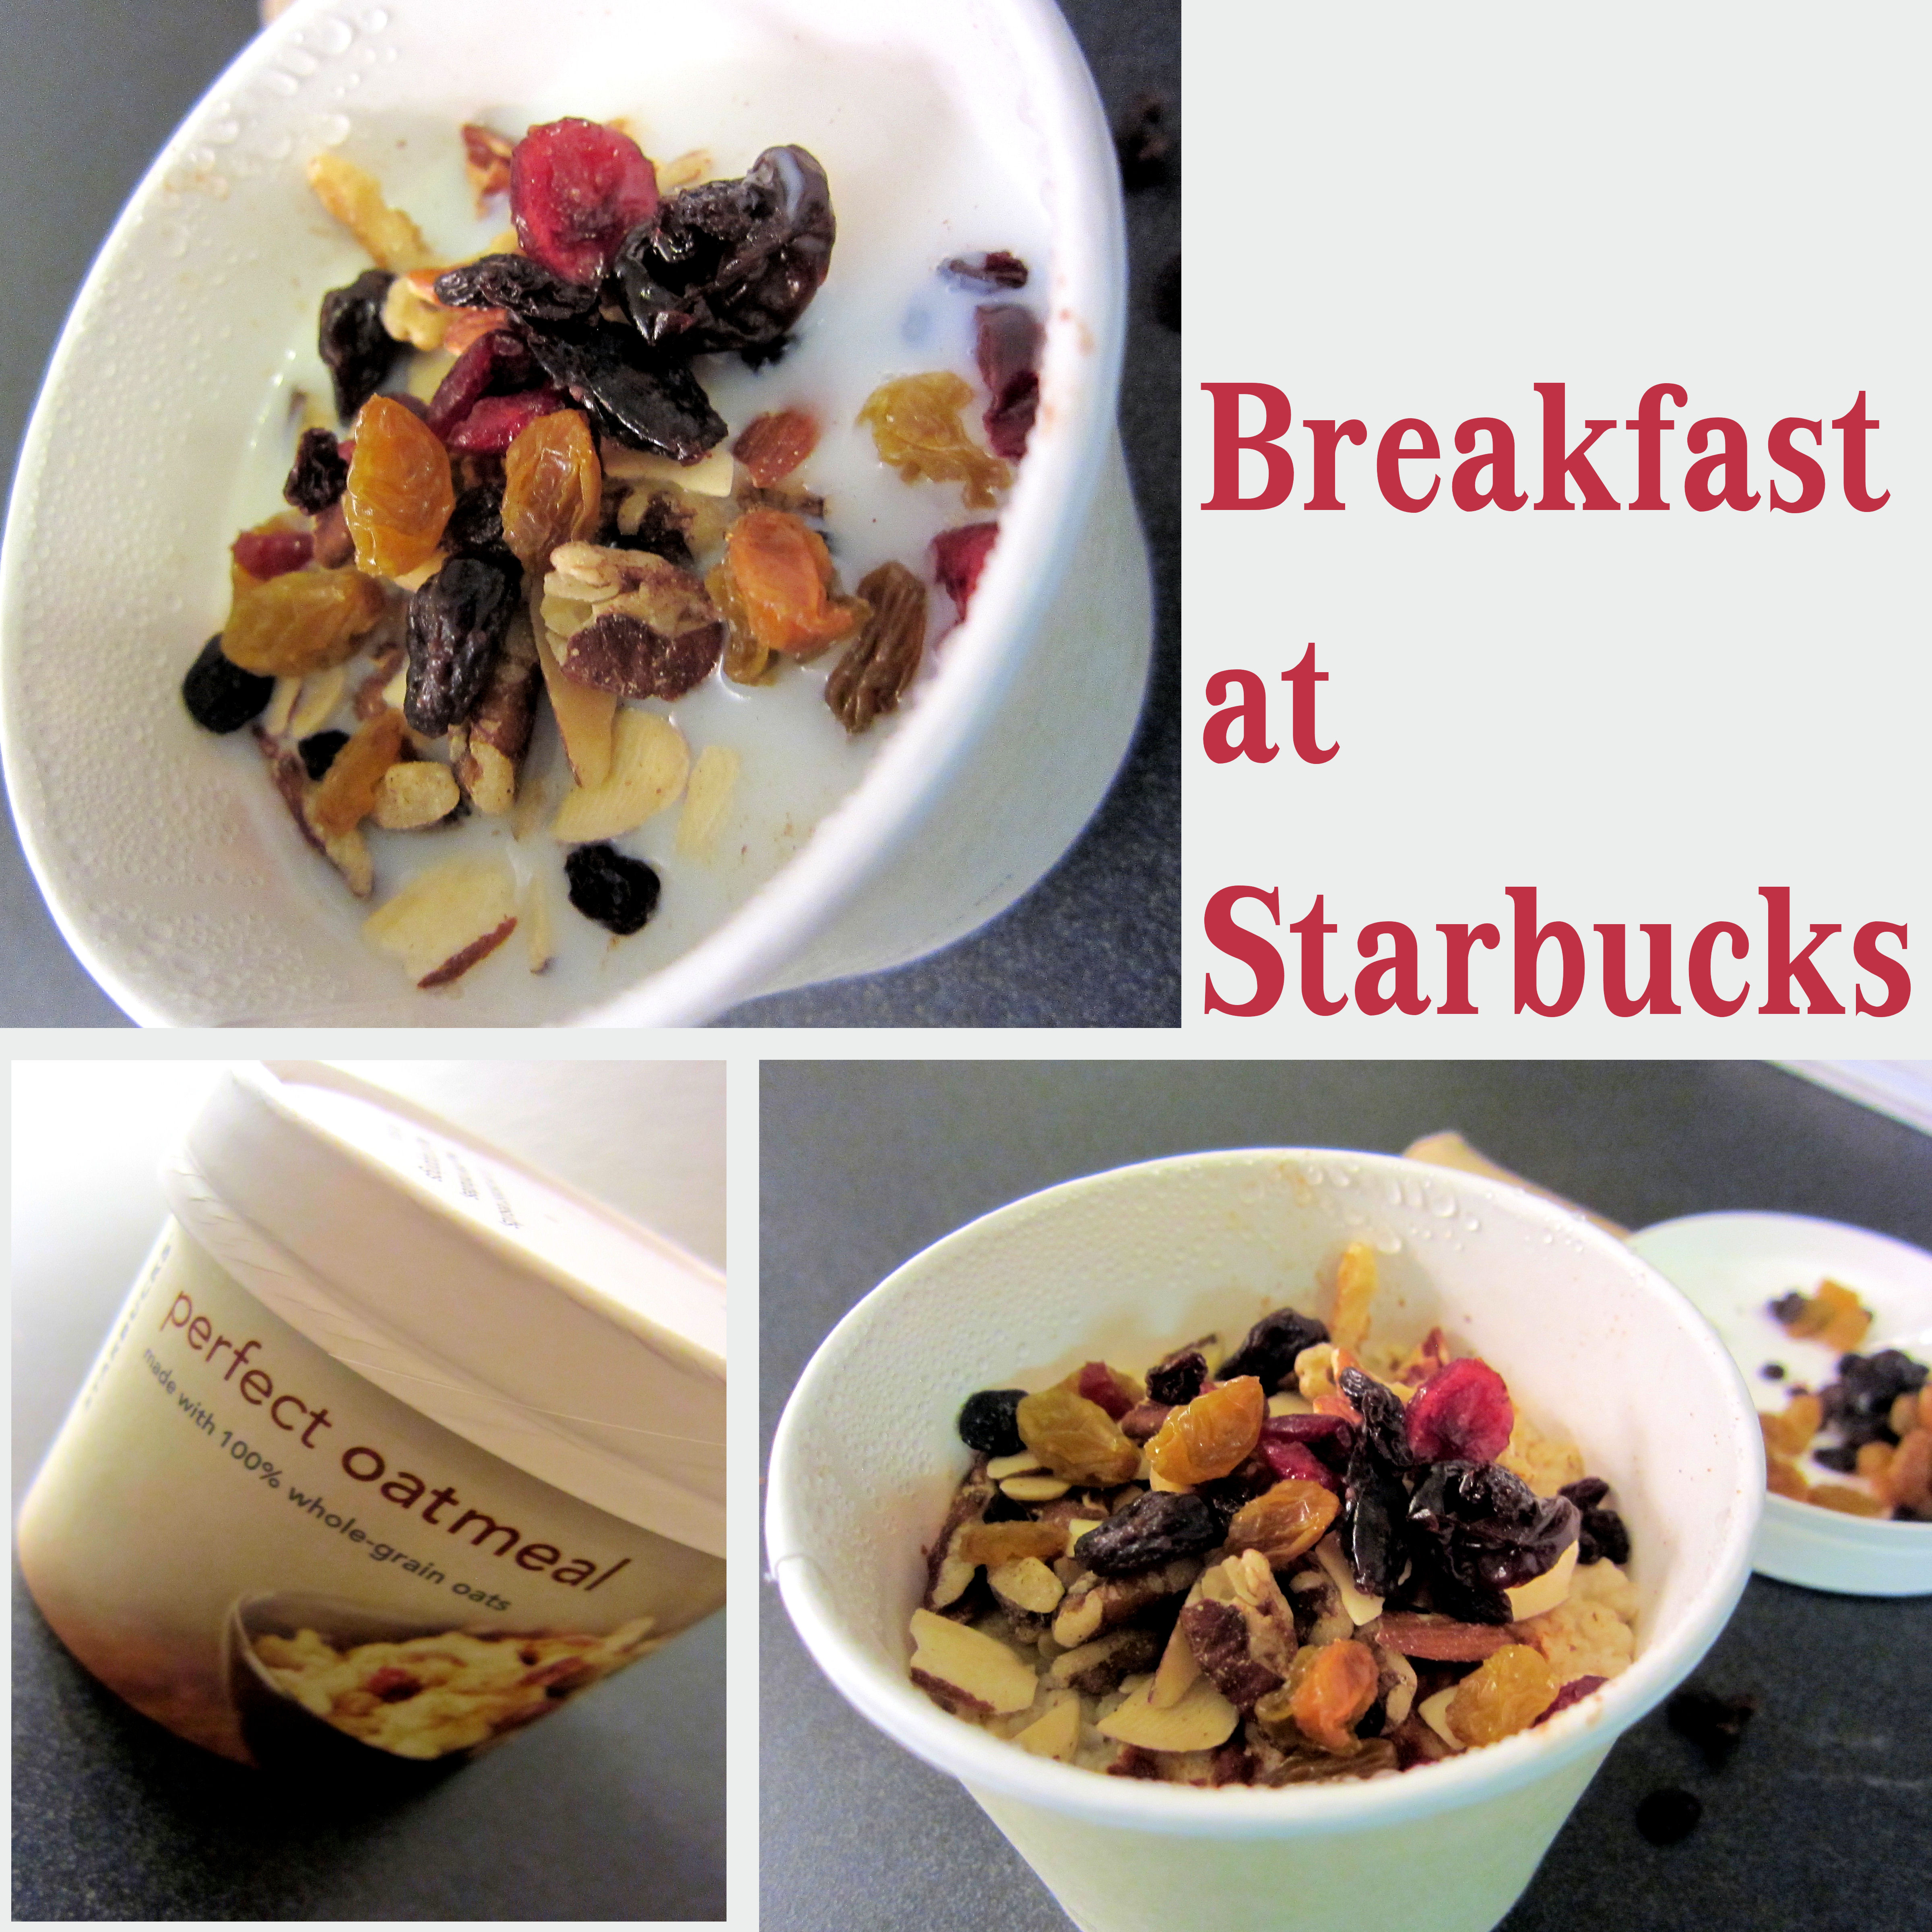 Healthy Breakfast Options At Starbucks
 Breakfast at Starbucks